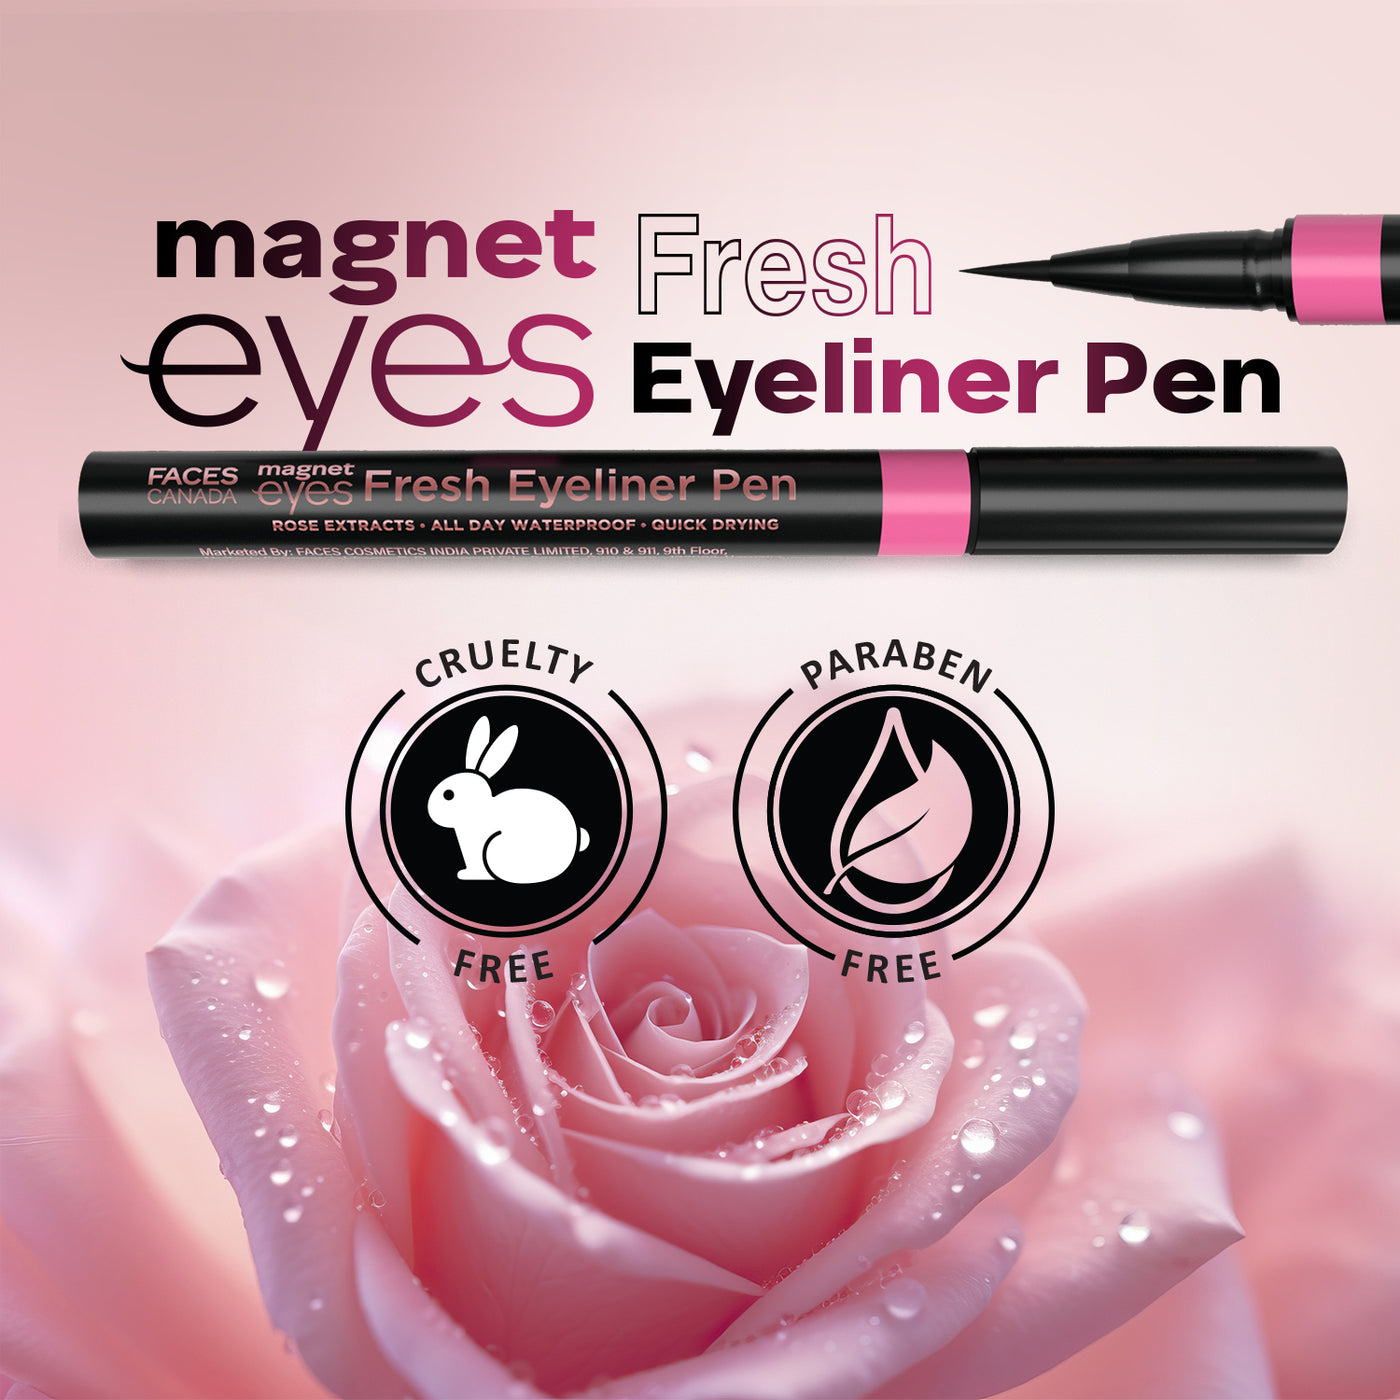 Magneteyes Fresh Eyeliner Pen